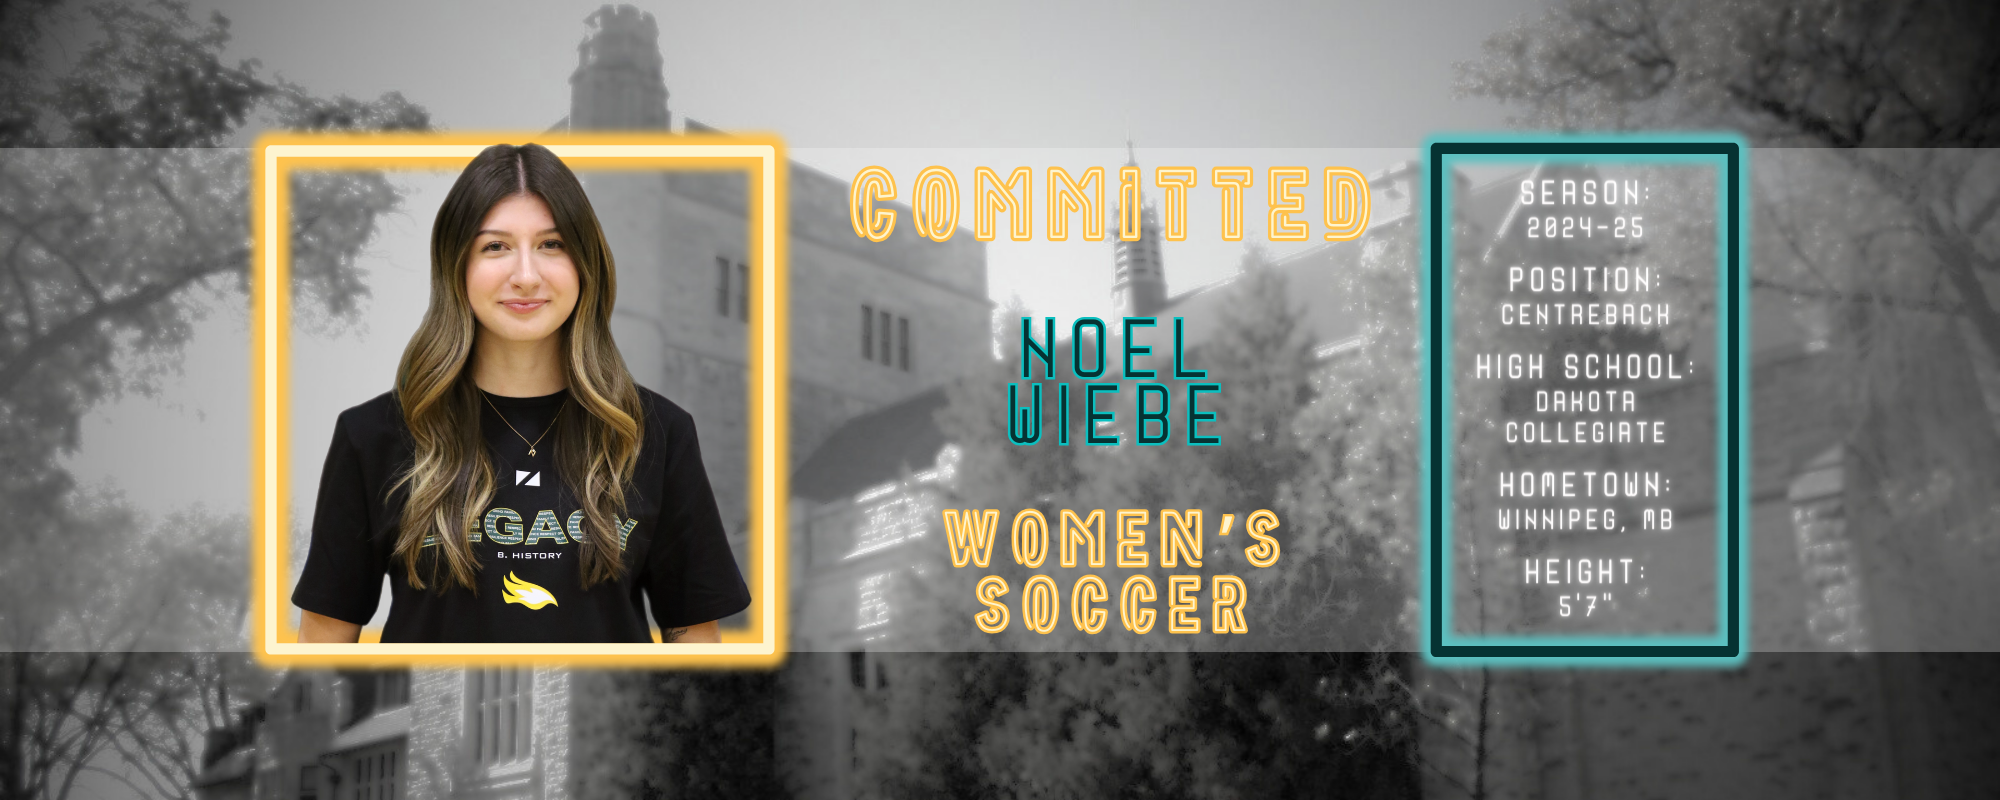 Blazers Women's Soccer Lock Down Defender Noel Wiebe